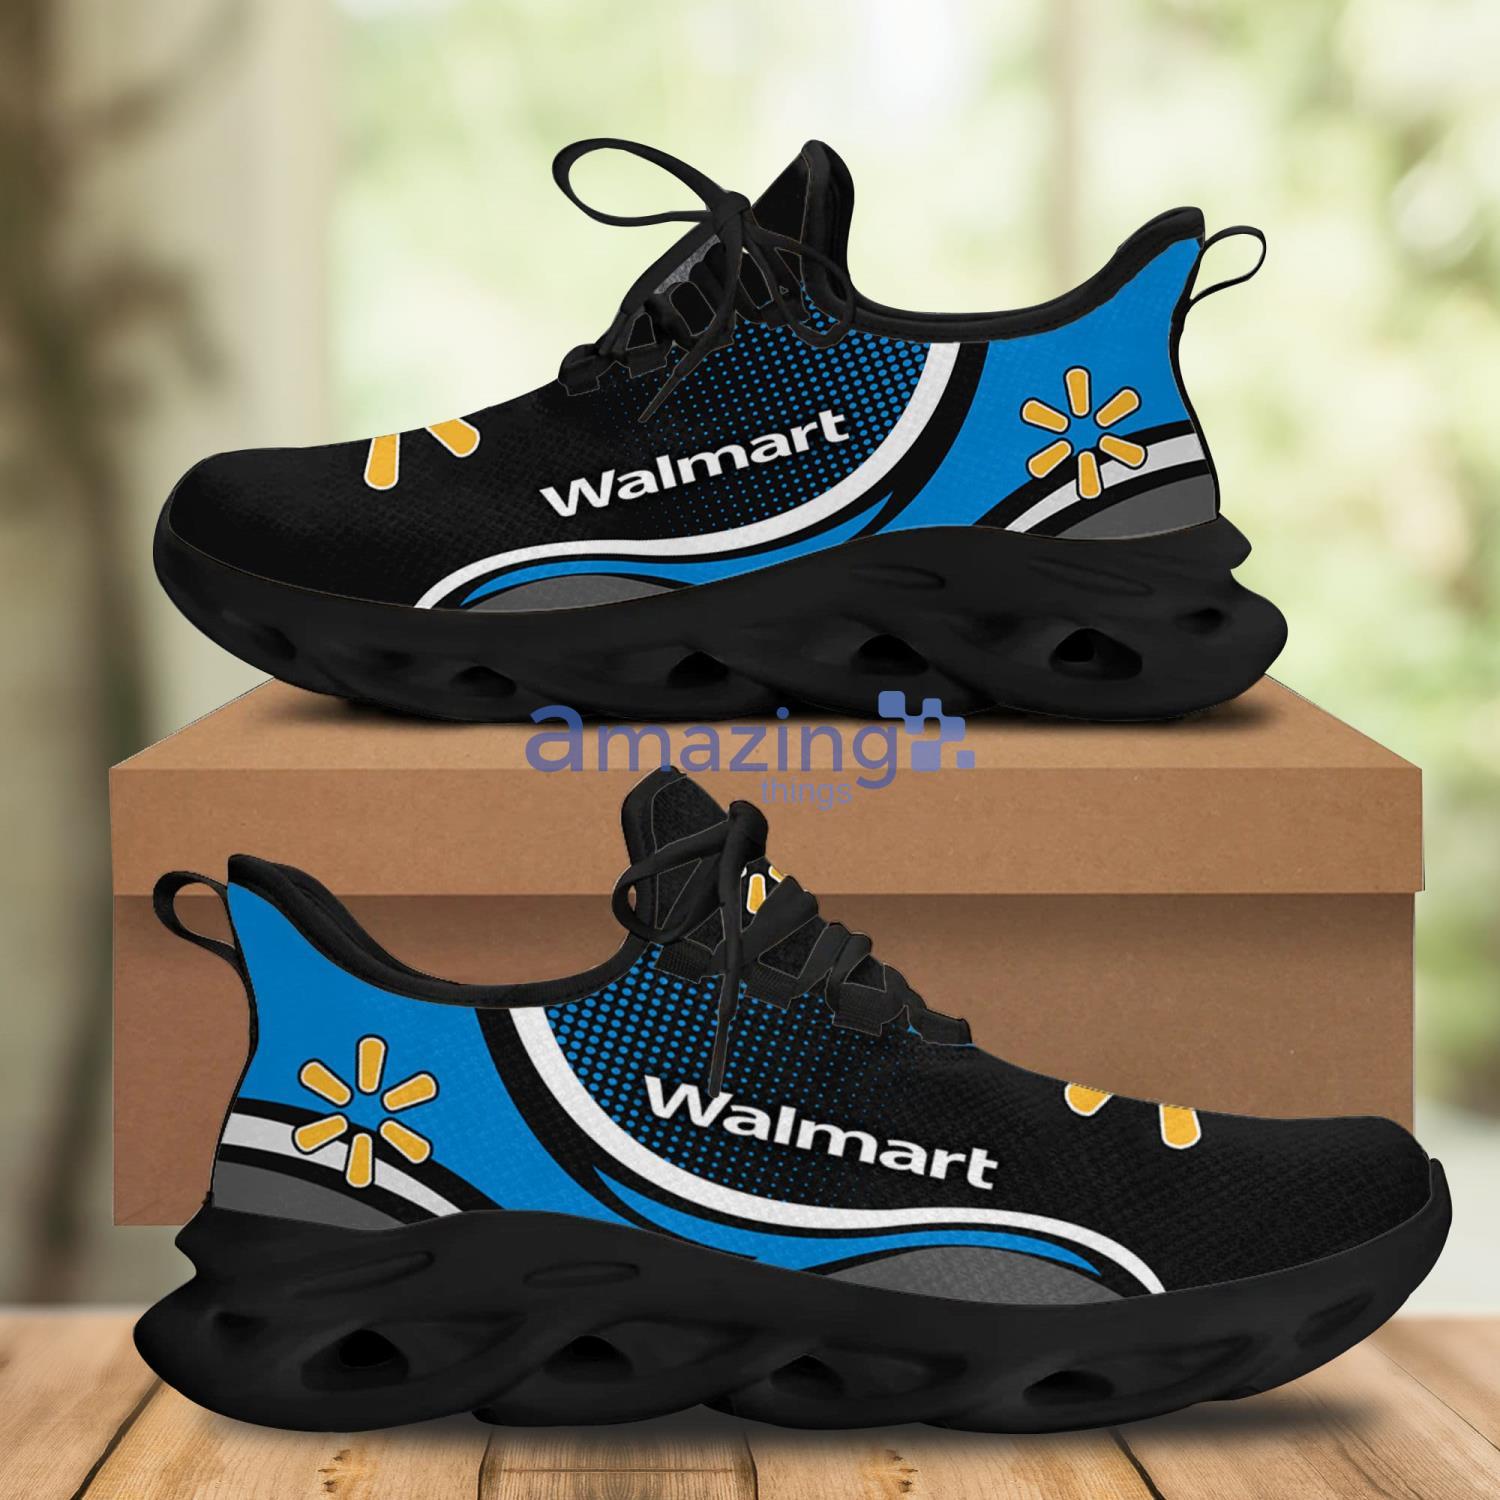 Walmart Men And Women Black Max Soul Shoes Running Sneakers